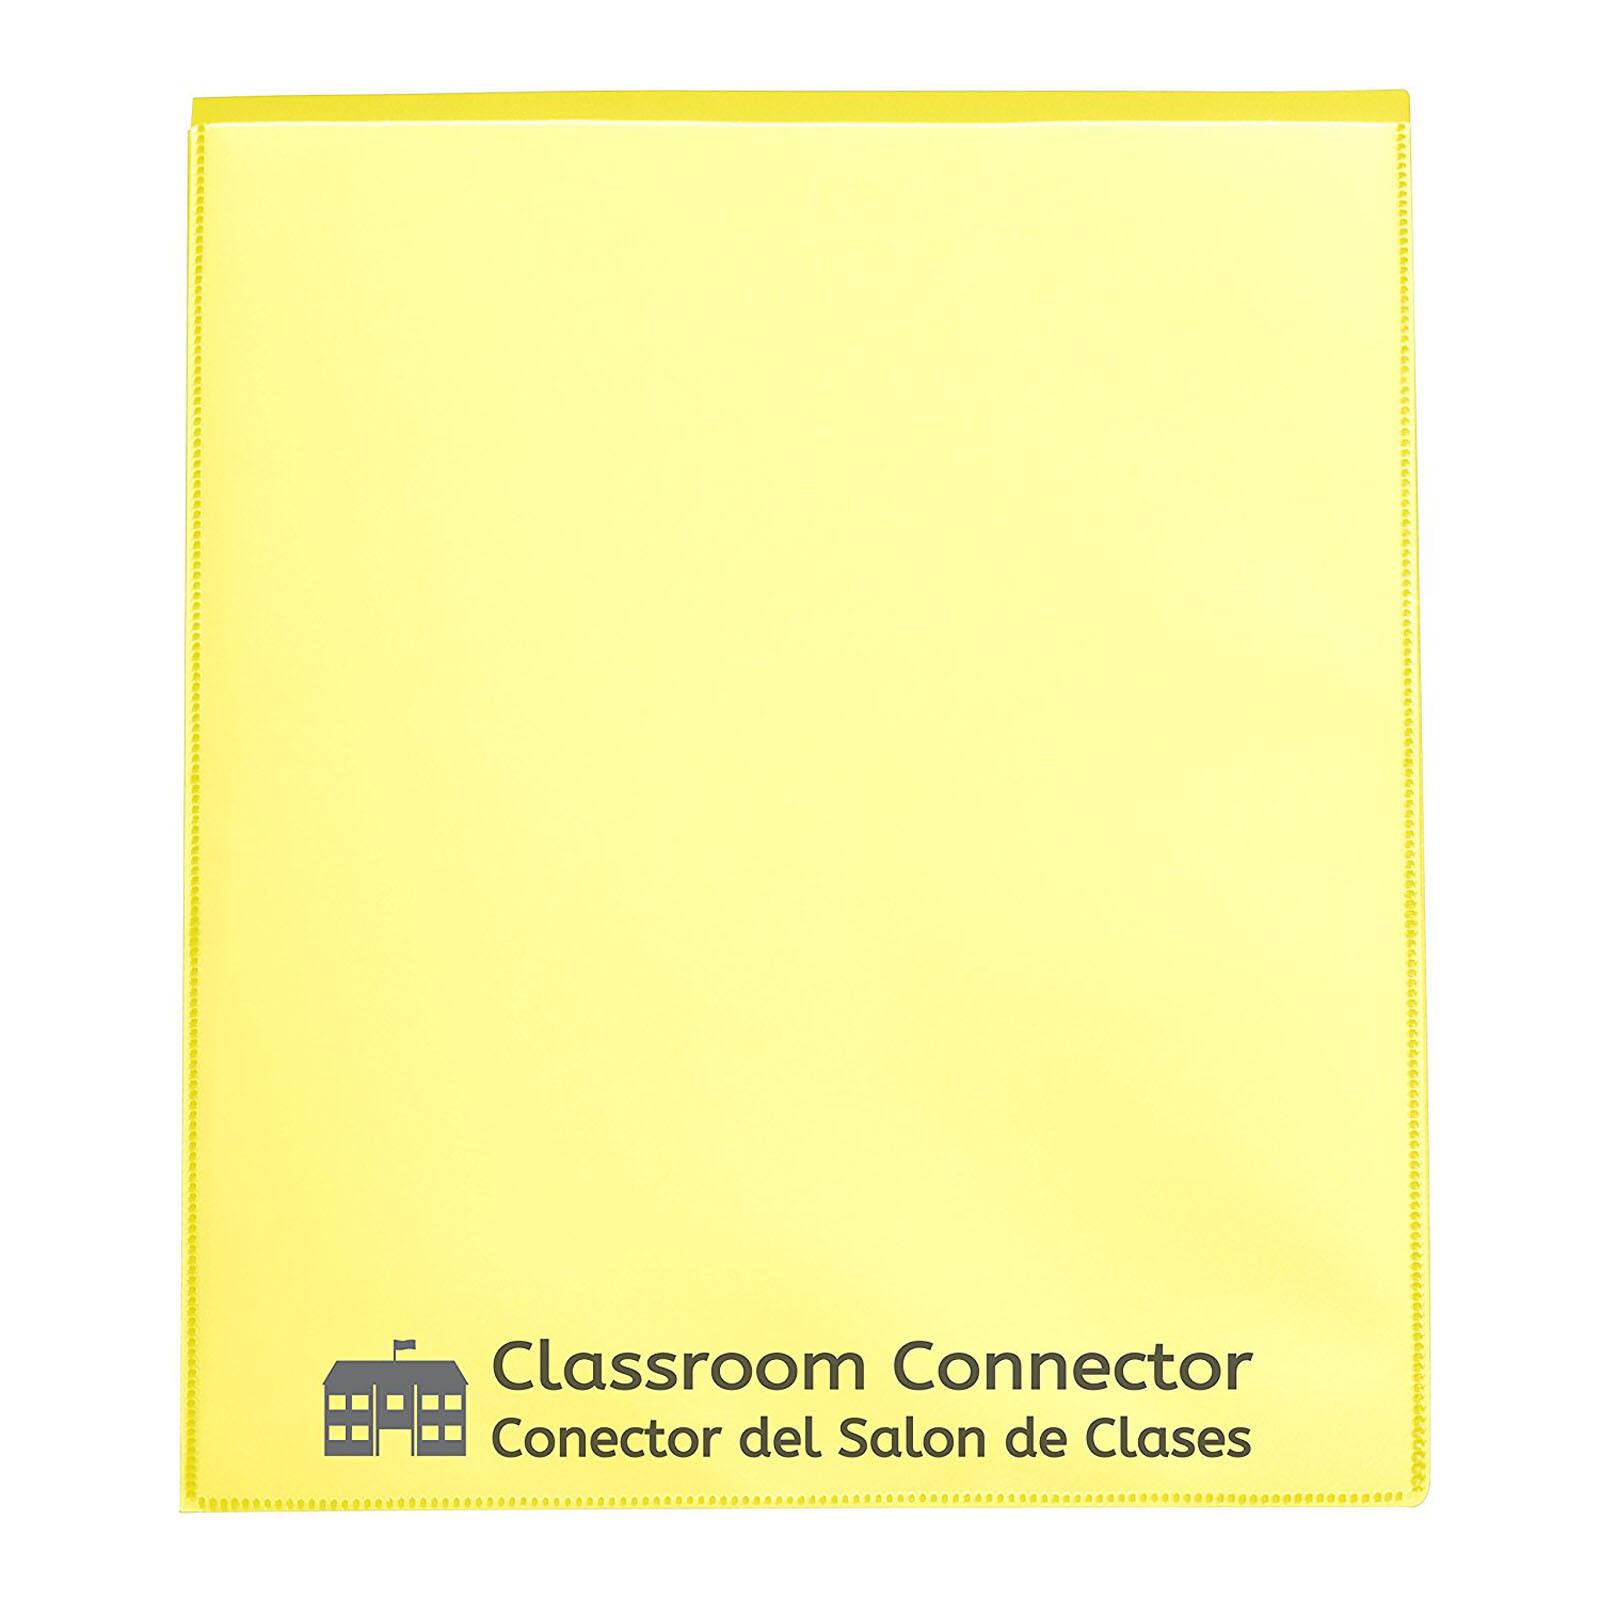 C-Line&#xAE; Classroom Connector&#x2122; School-To-Home Folders, Box of 25